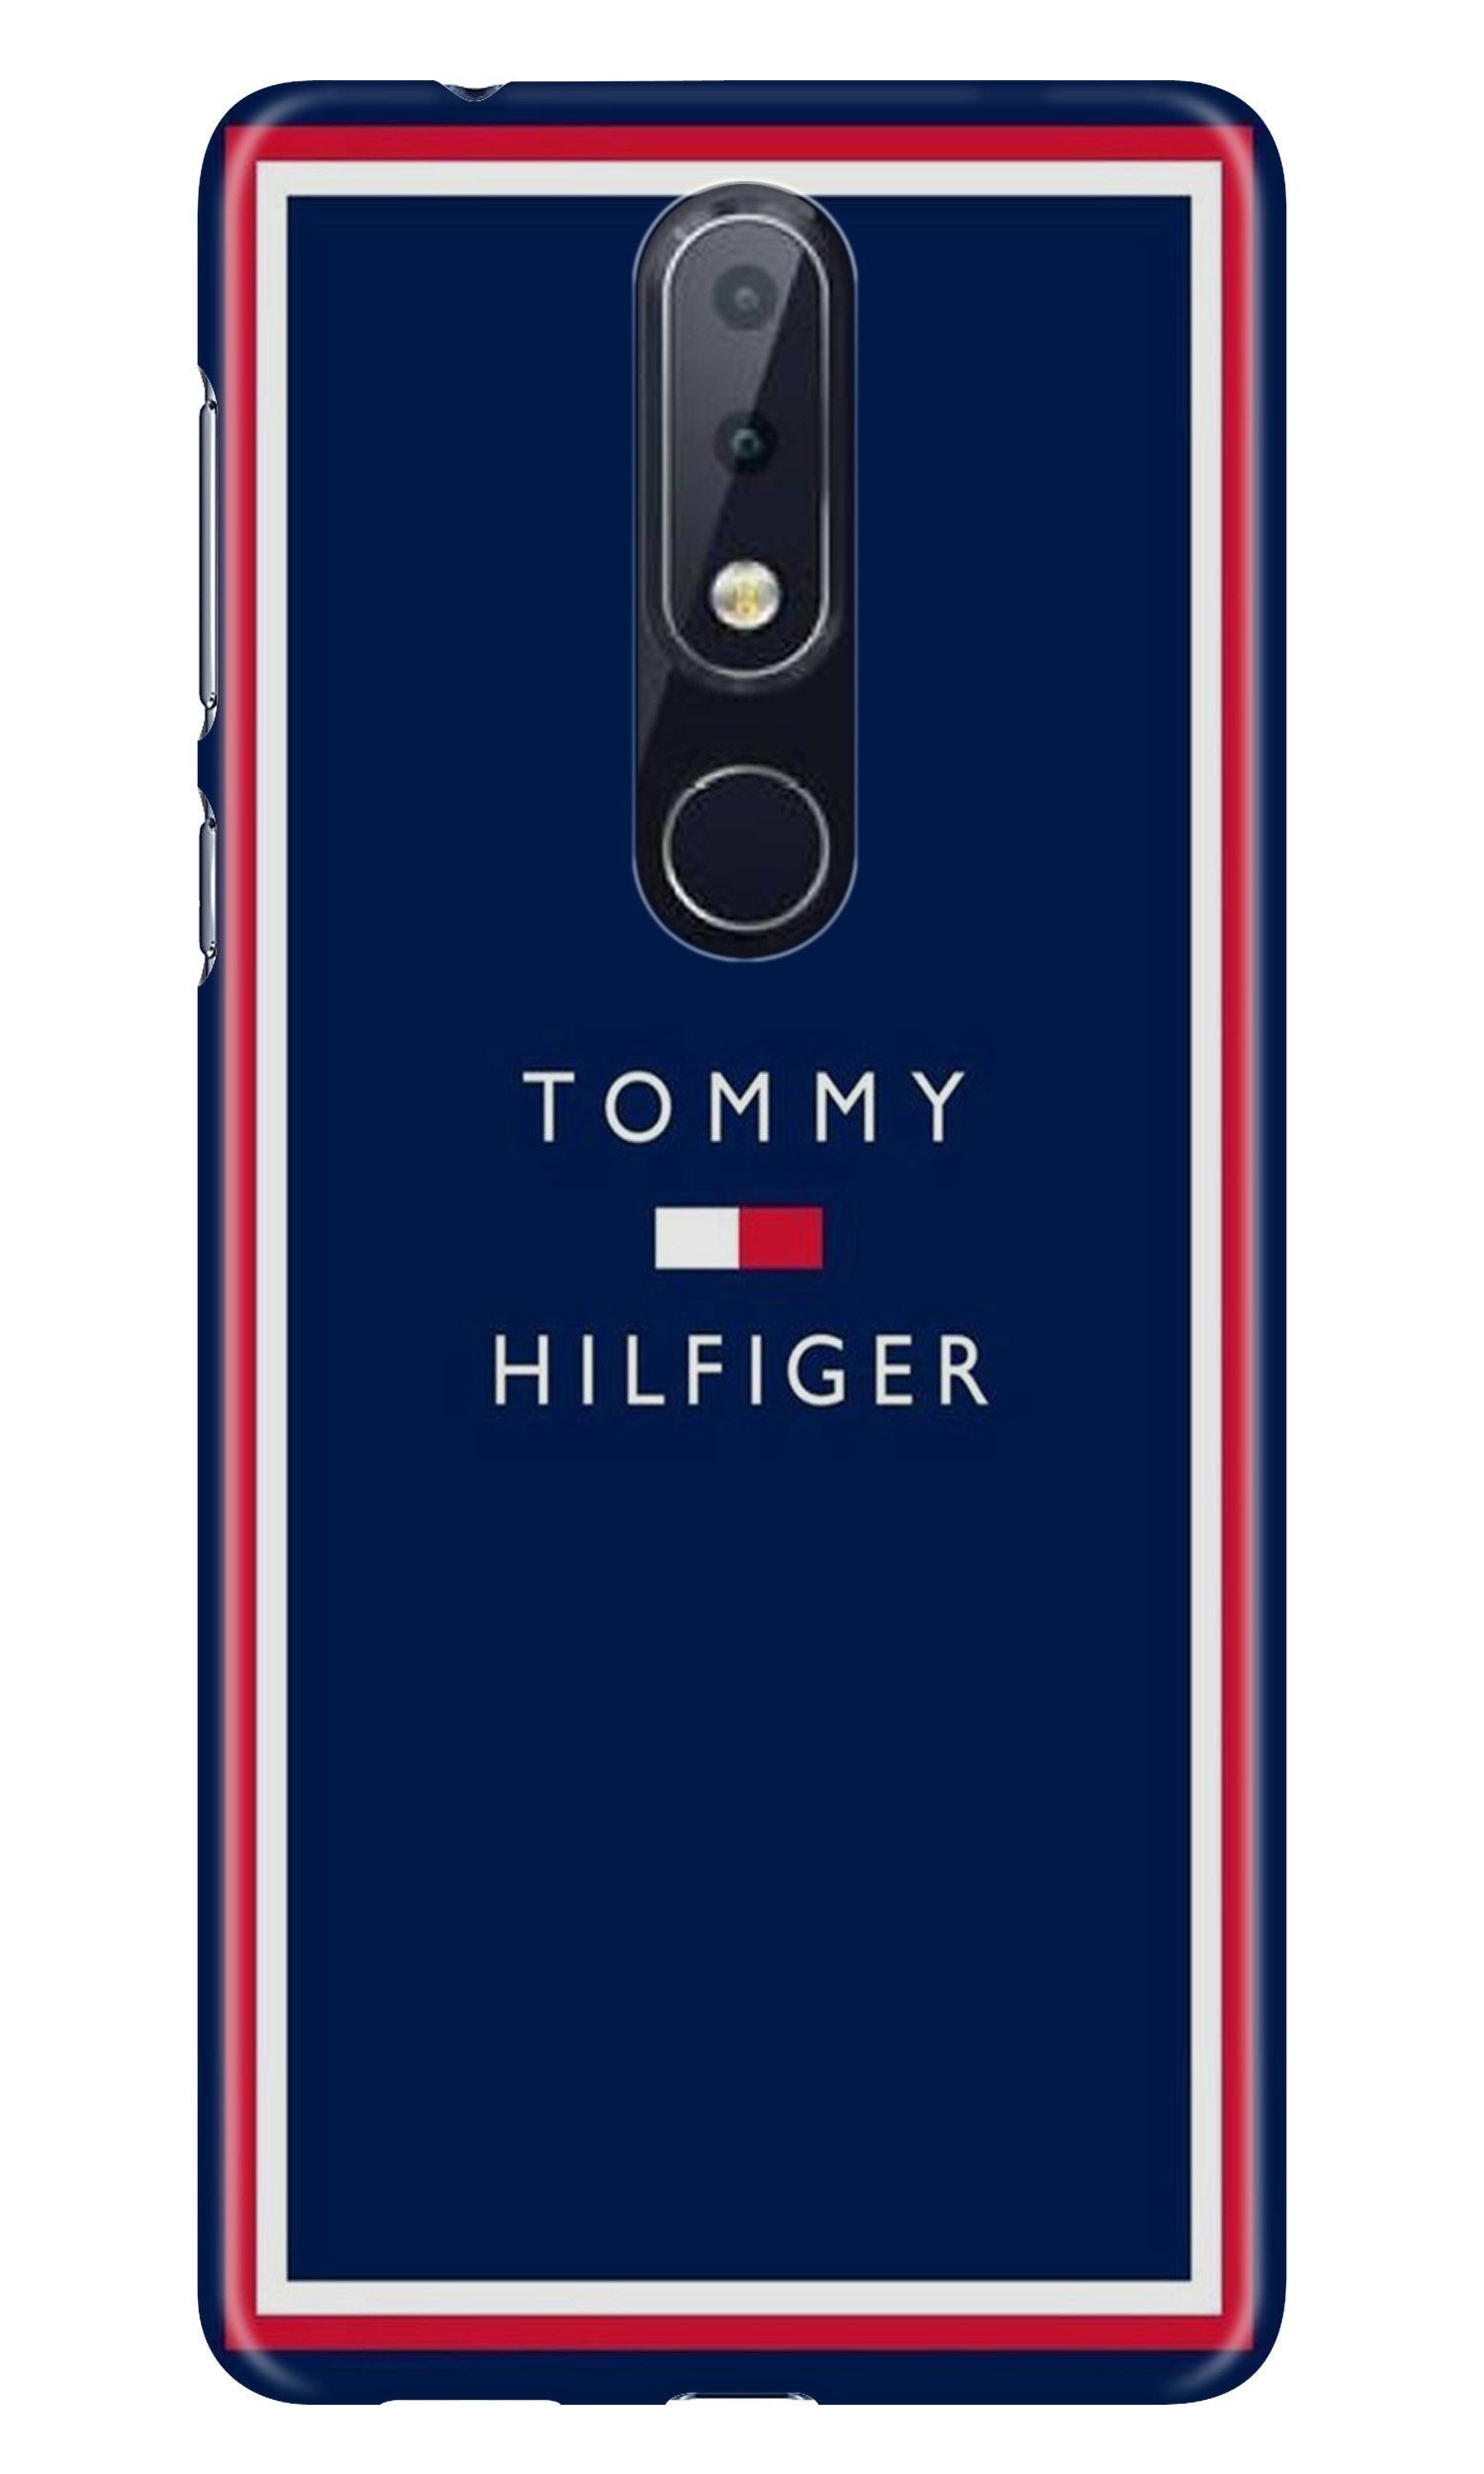 Tommy Hilfiger Case for Nokia 6.1 Plus (Design No. 275)